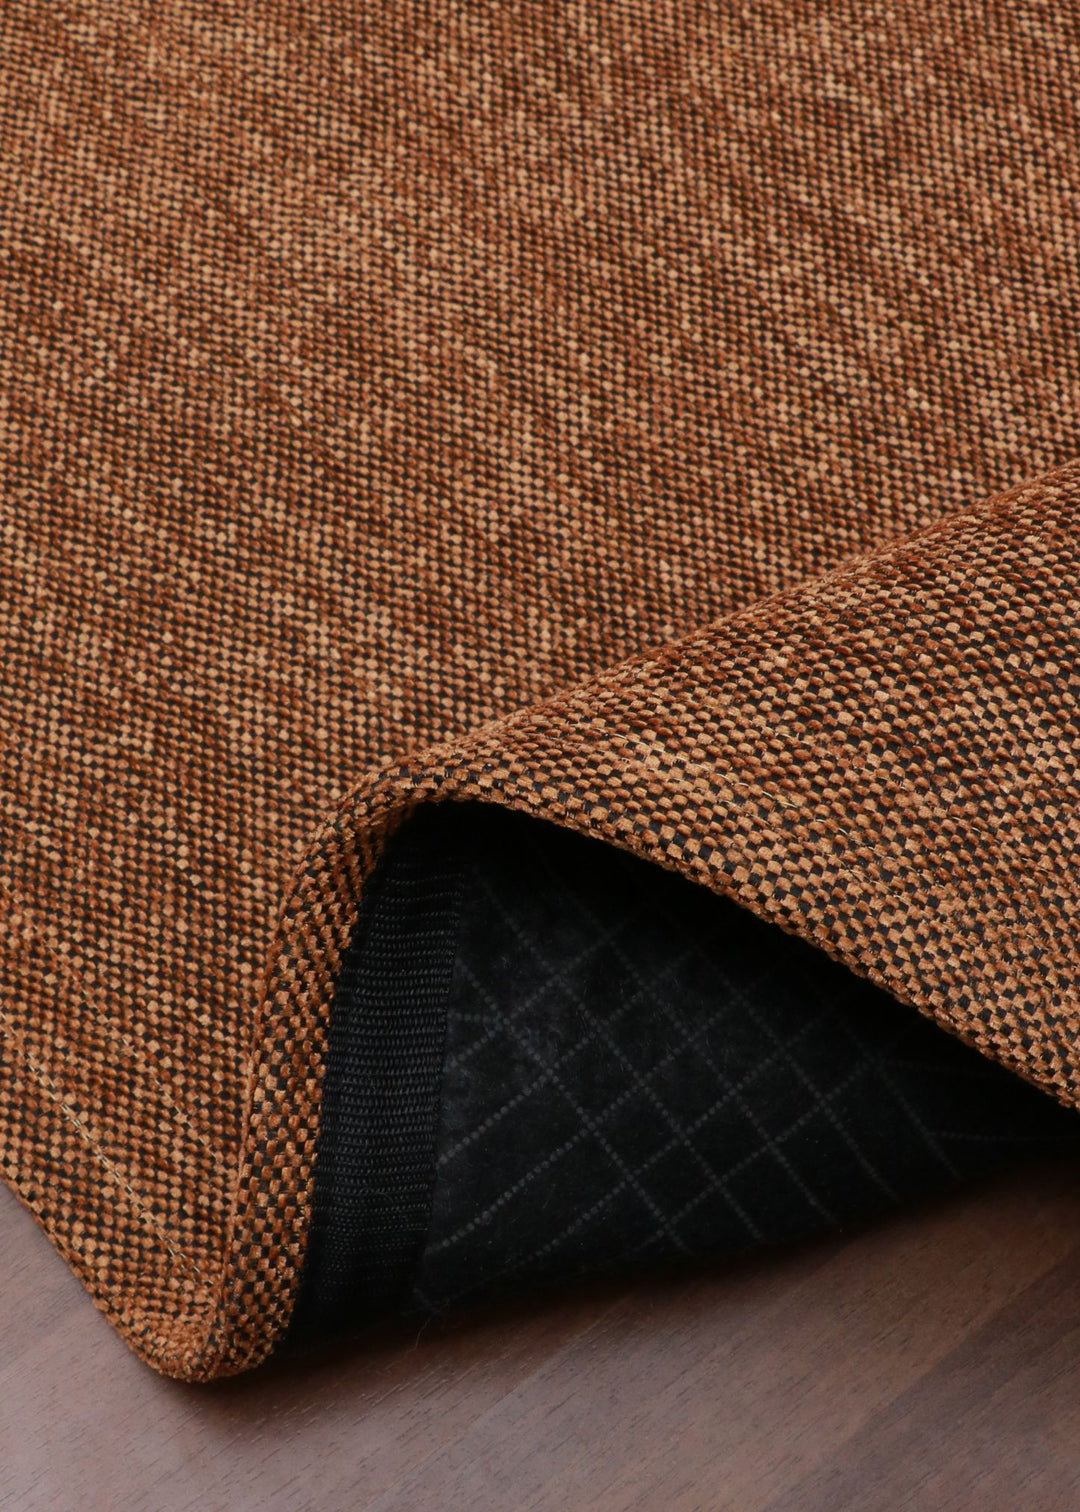 Golden & Black Woven Fabric Rug - Indoor Use